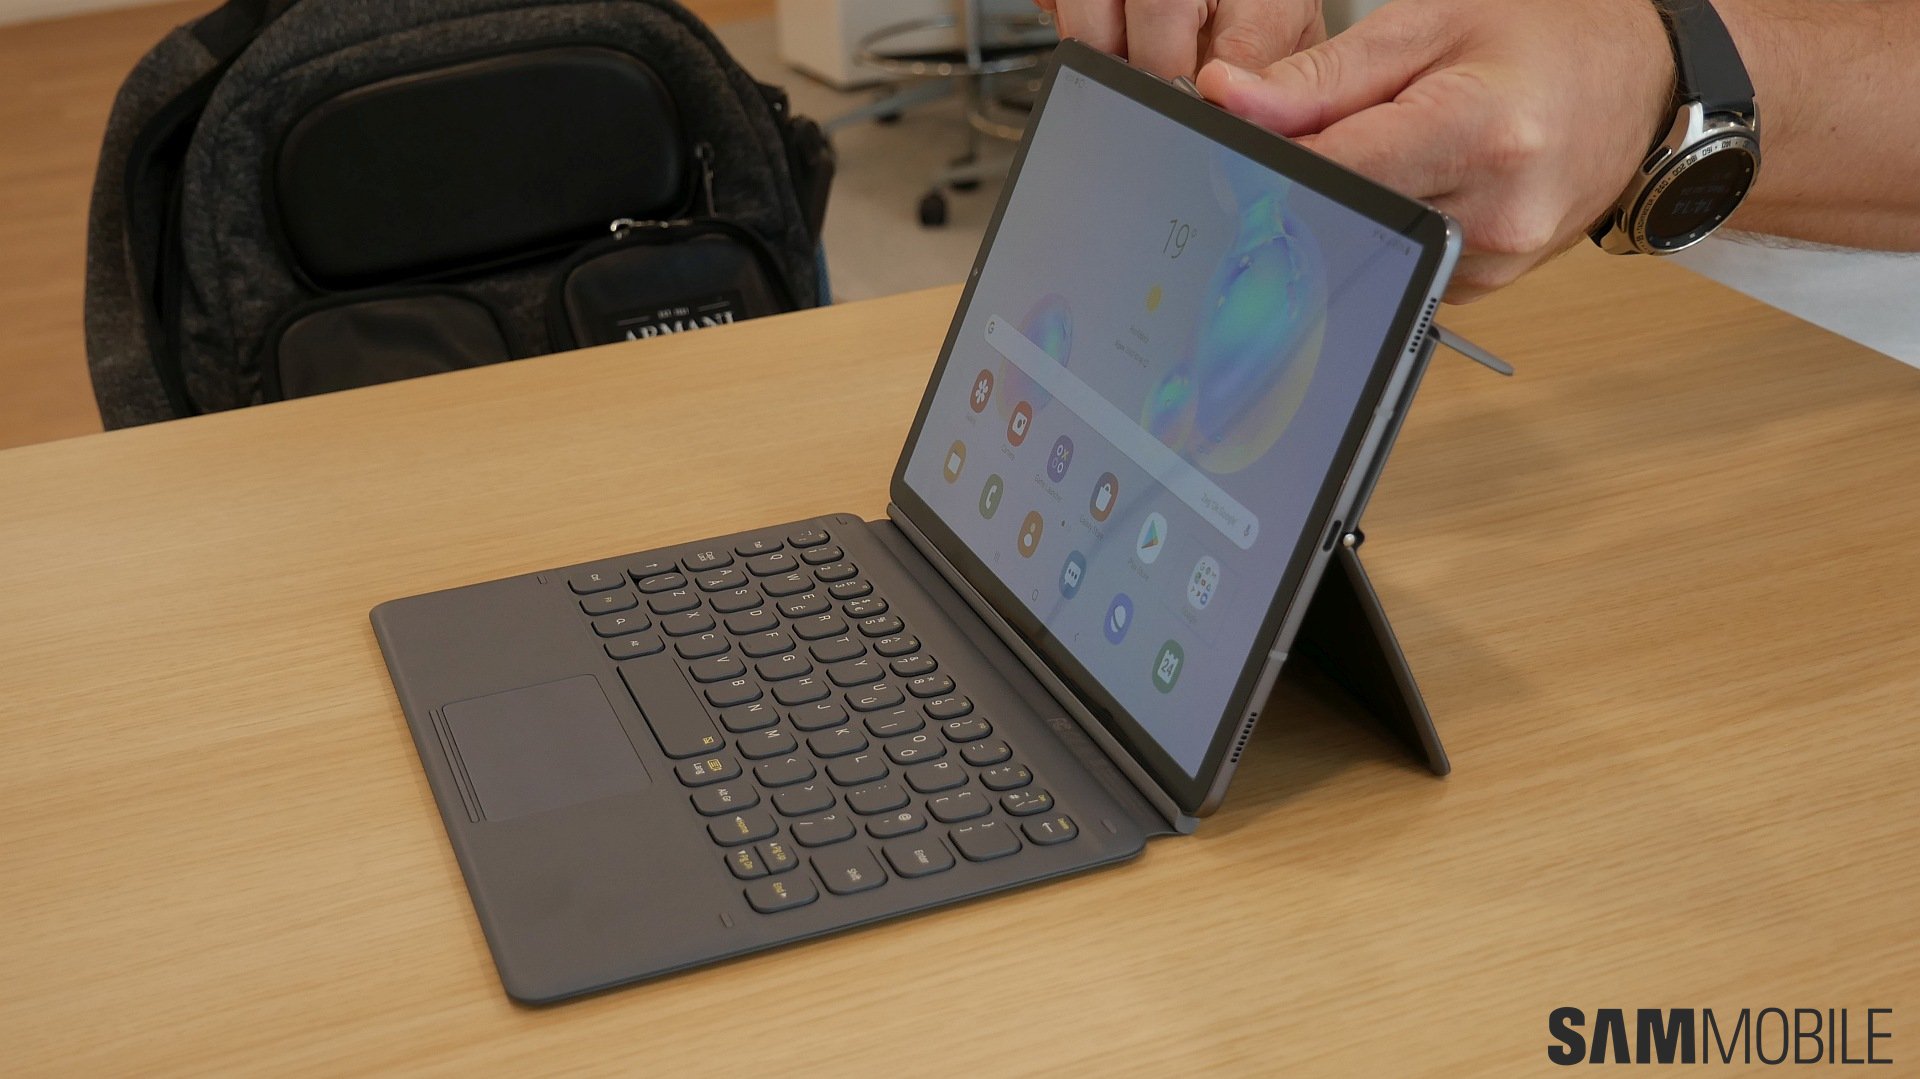 Samsung Galaxy Tab S6 incelemesi: 2019'daki en iyi Android tablet 12